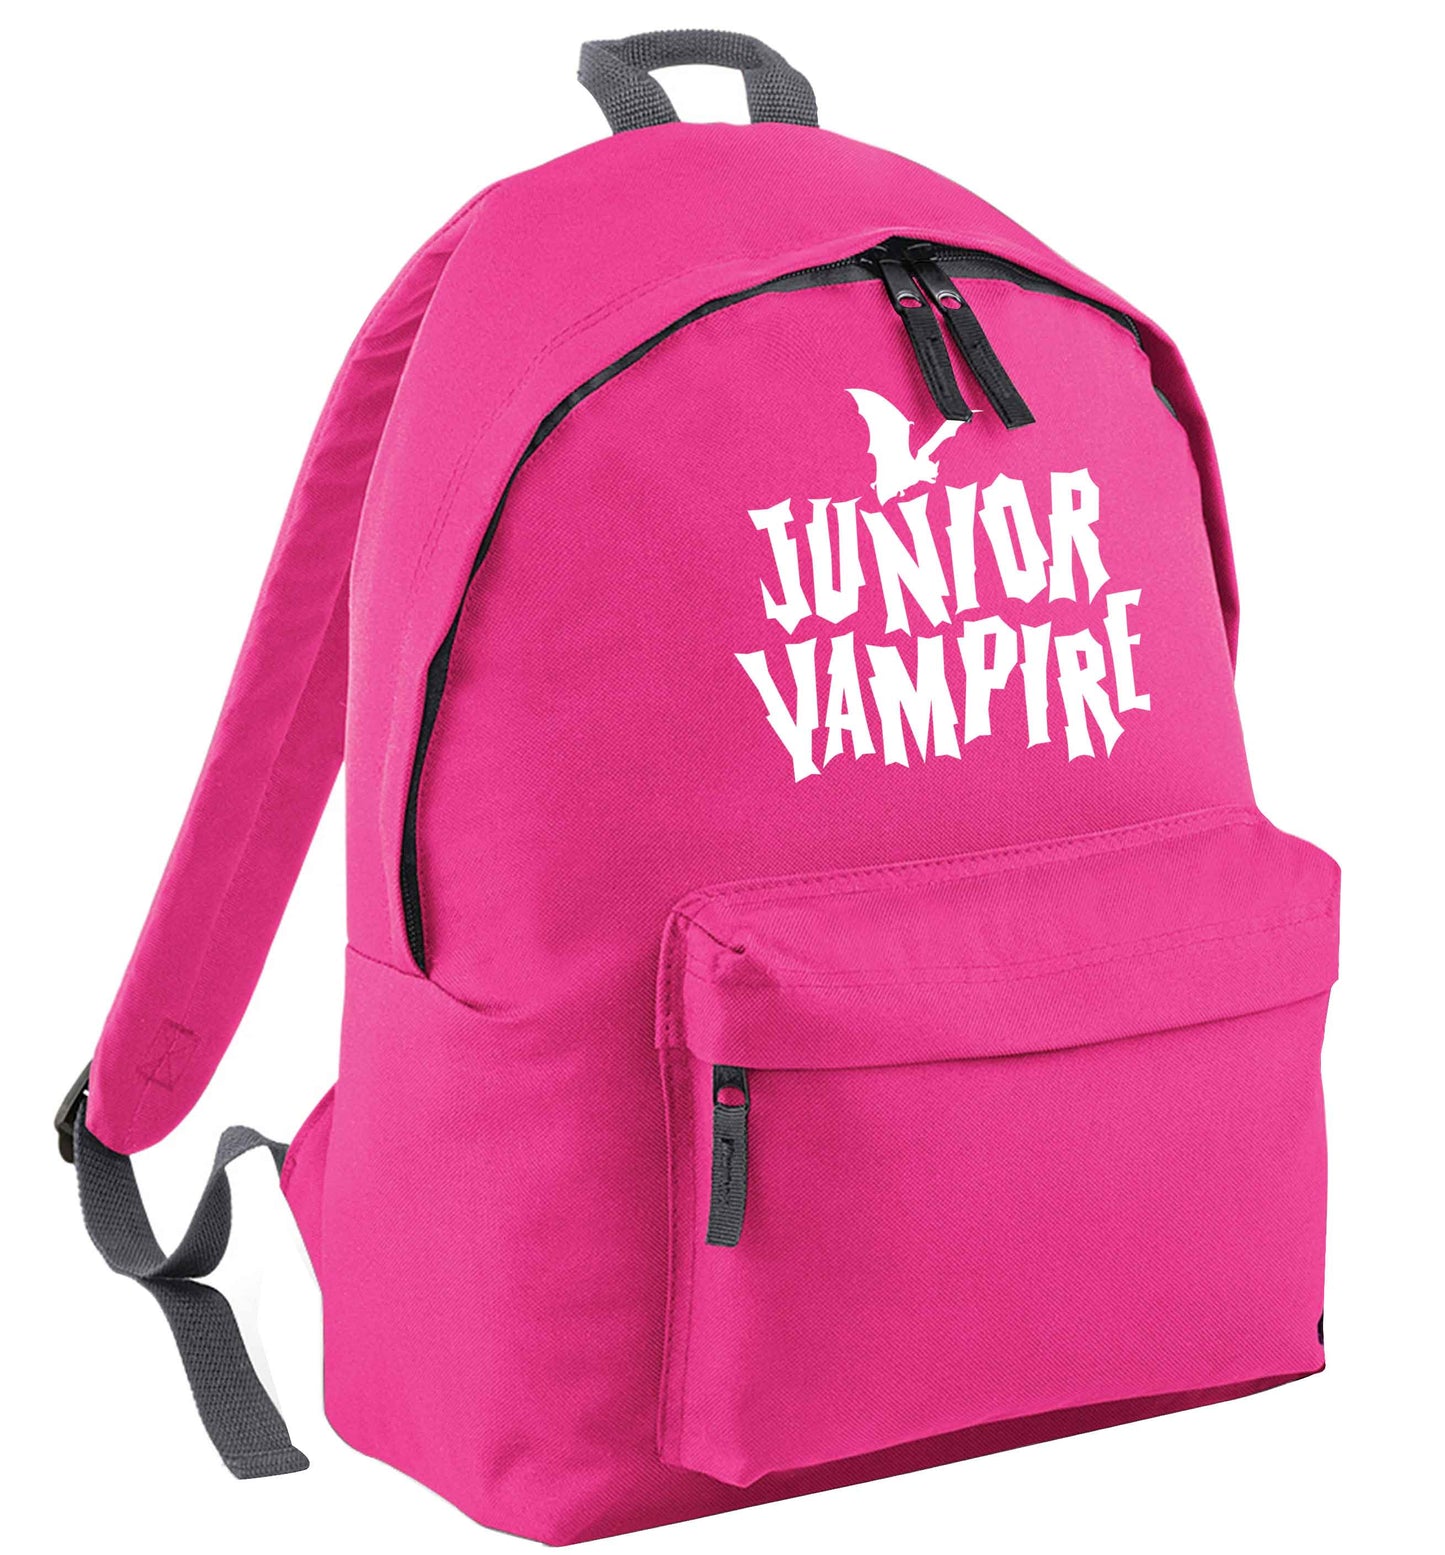 Junior vampire pink adults backpack